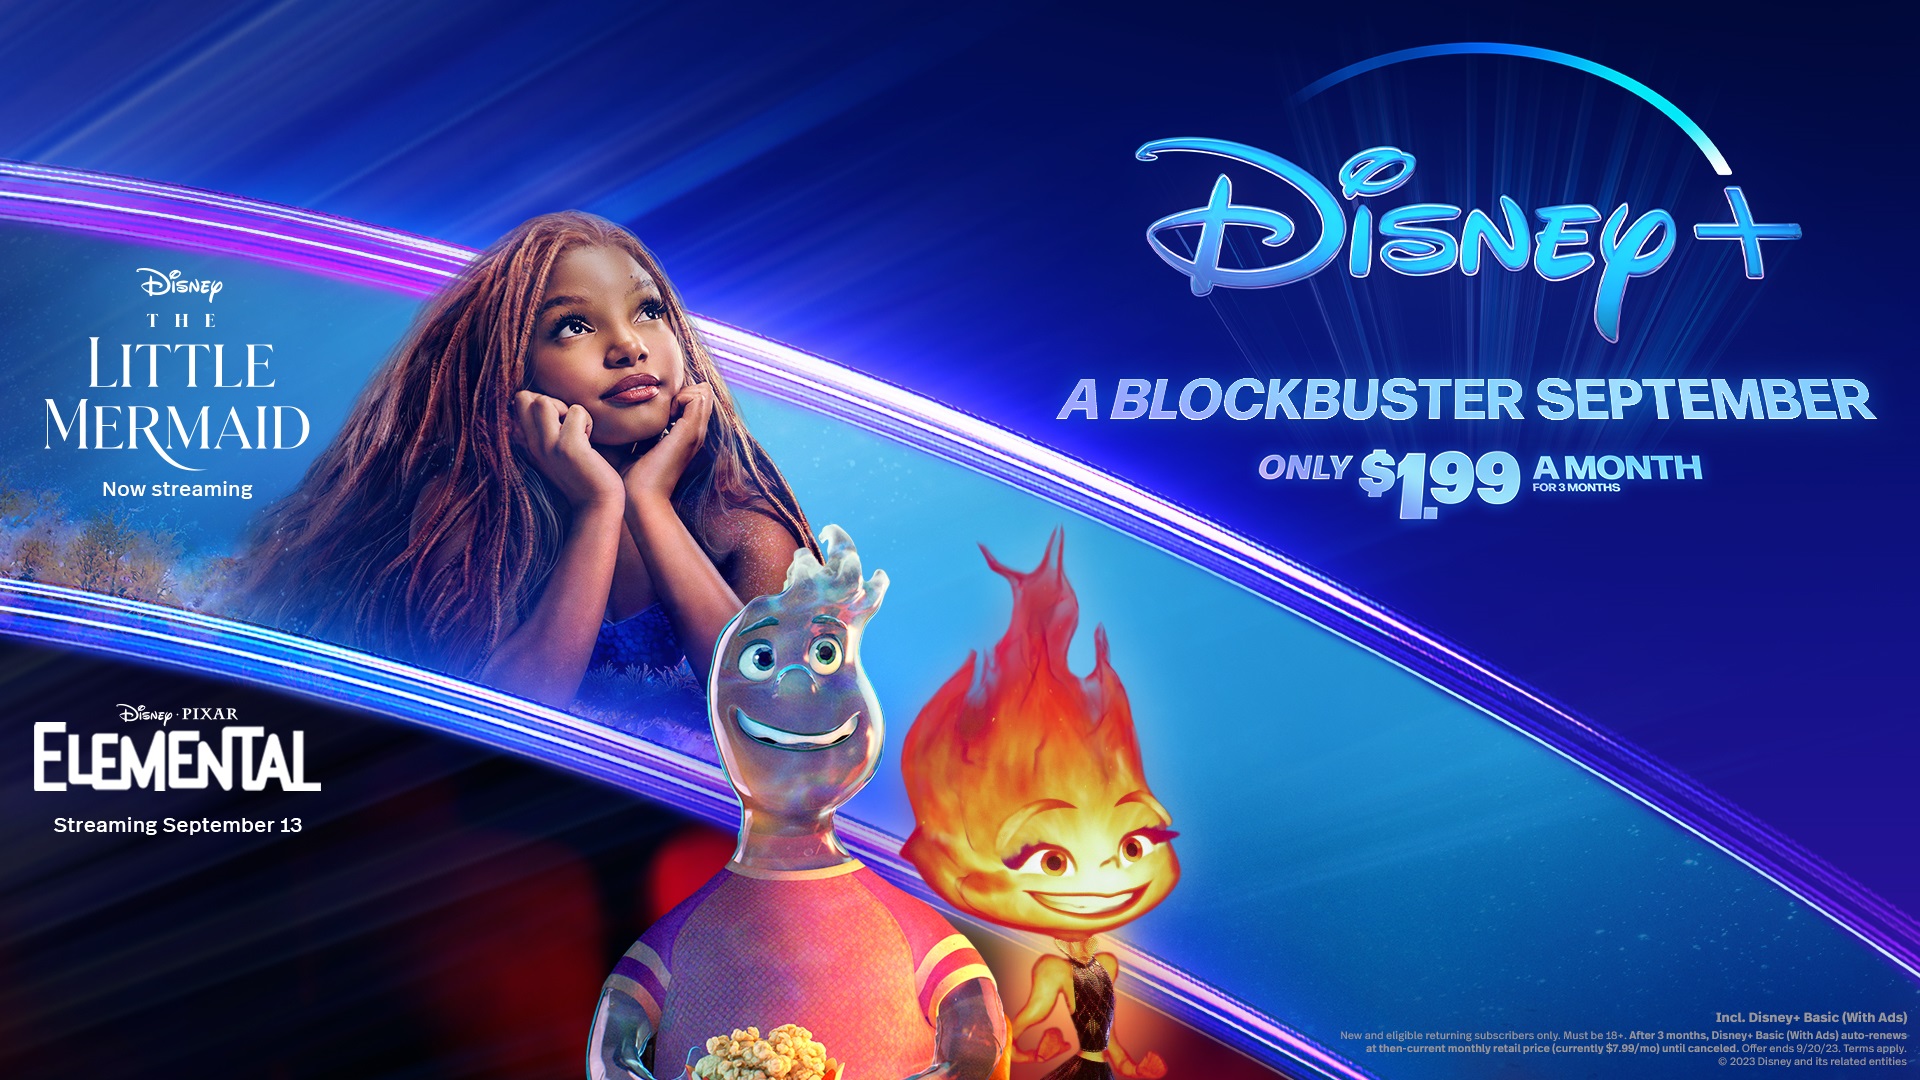 Disney And Pixar's “Elemental” Begins Streaming On Disney+ Sept